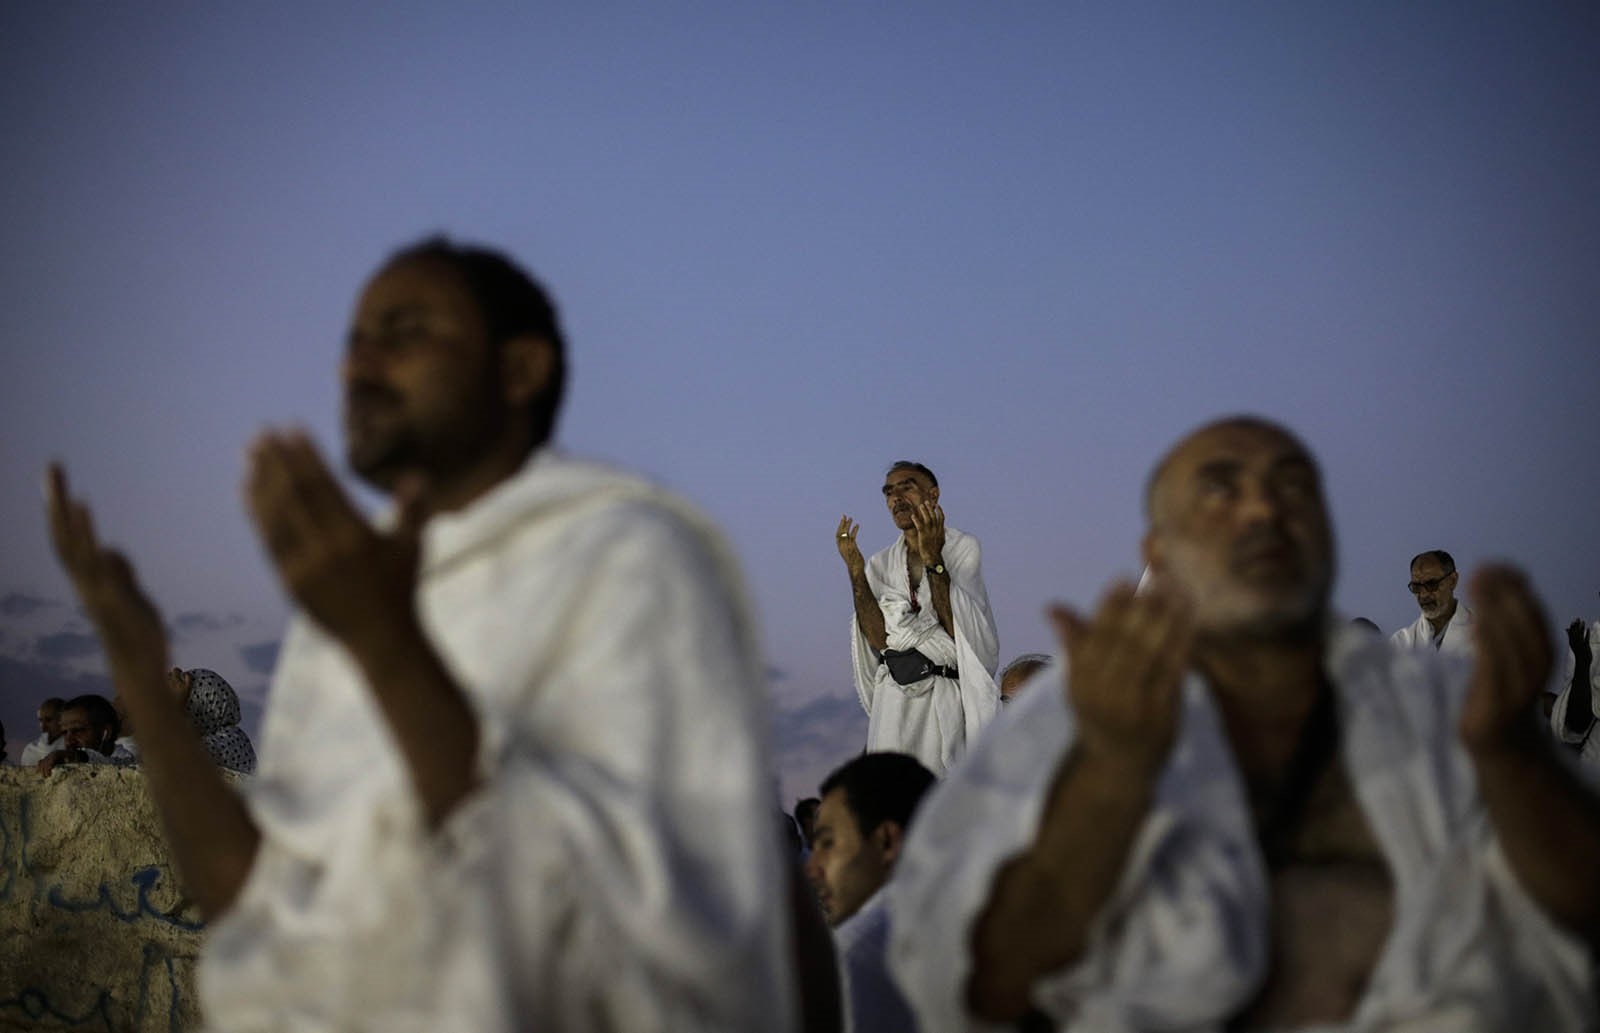 Muslim worshippers pray during the Hajj pilgrimage on the Mount Arafat, near Mecca, Saudi Arabia, 31 August 2017 (EPA Photo)